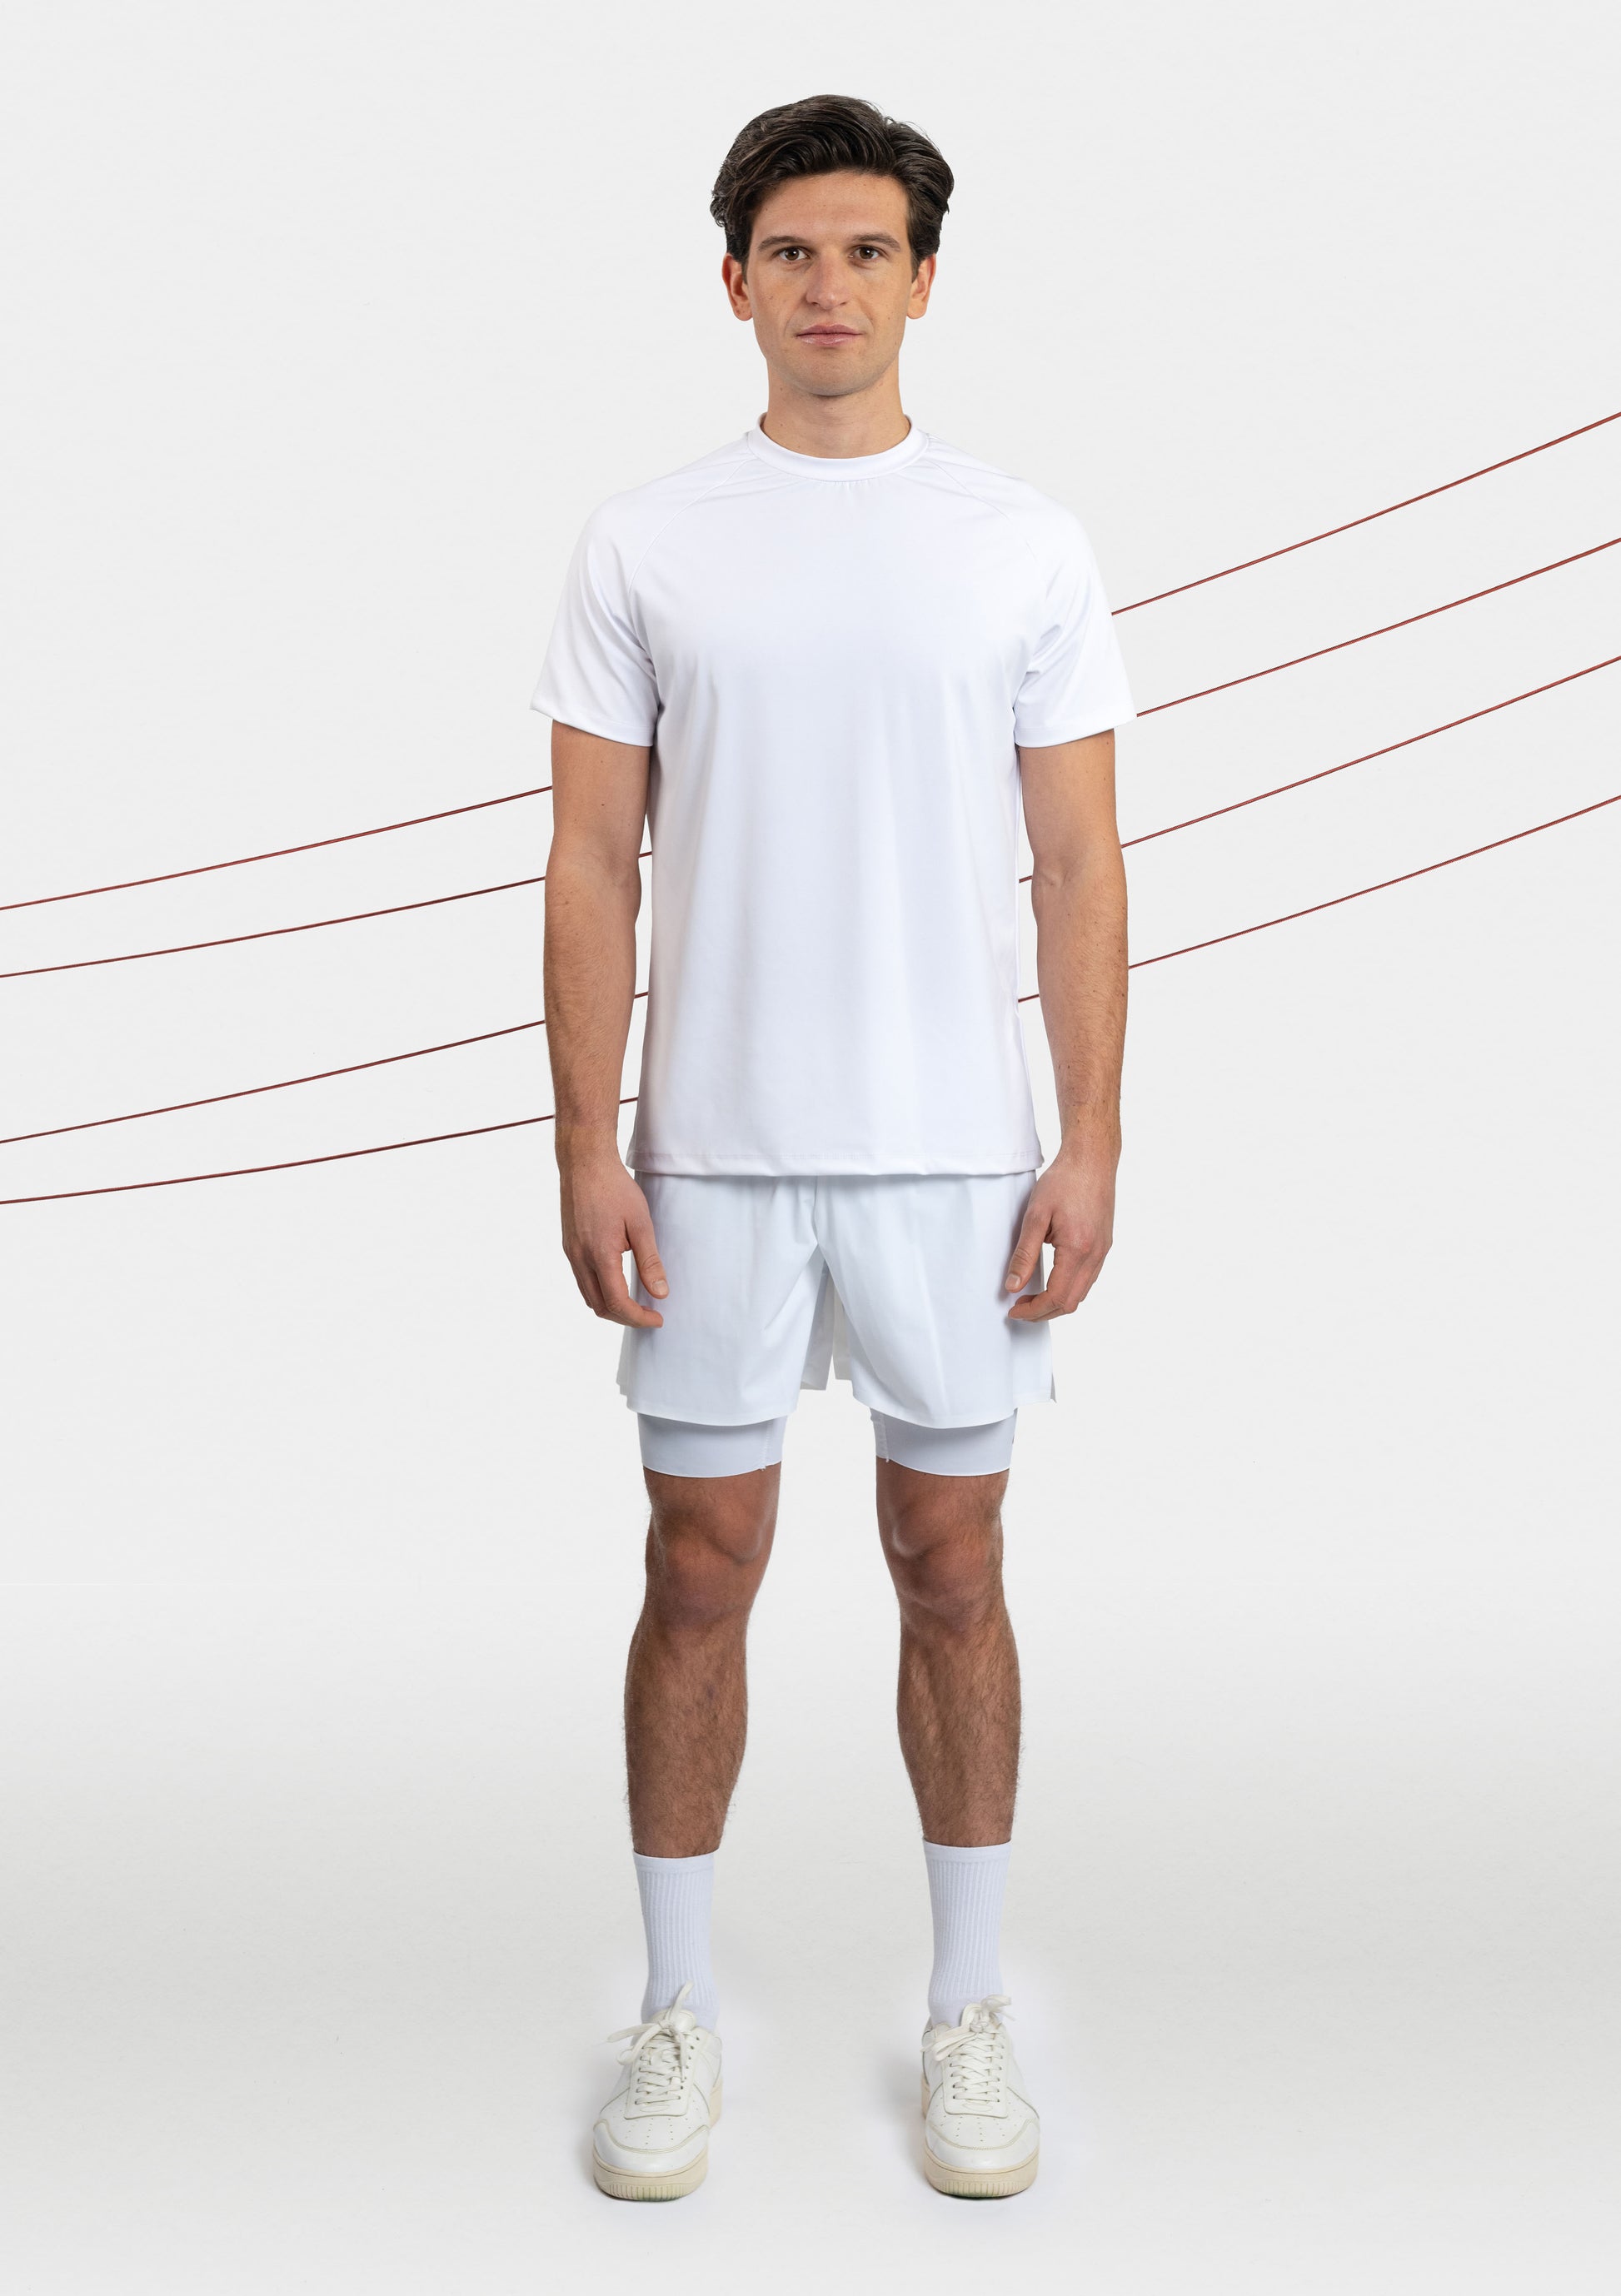 mens white running shorts front